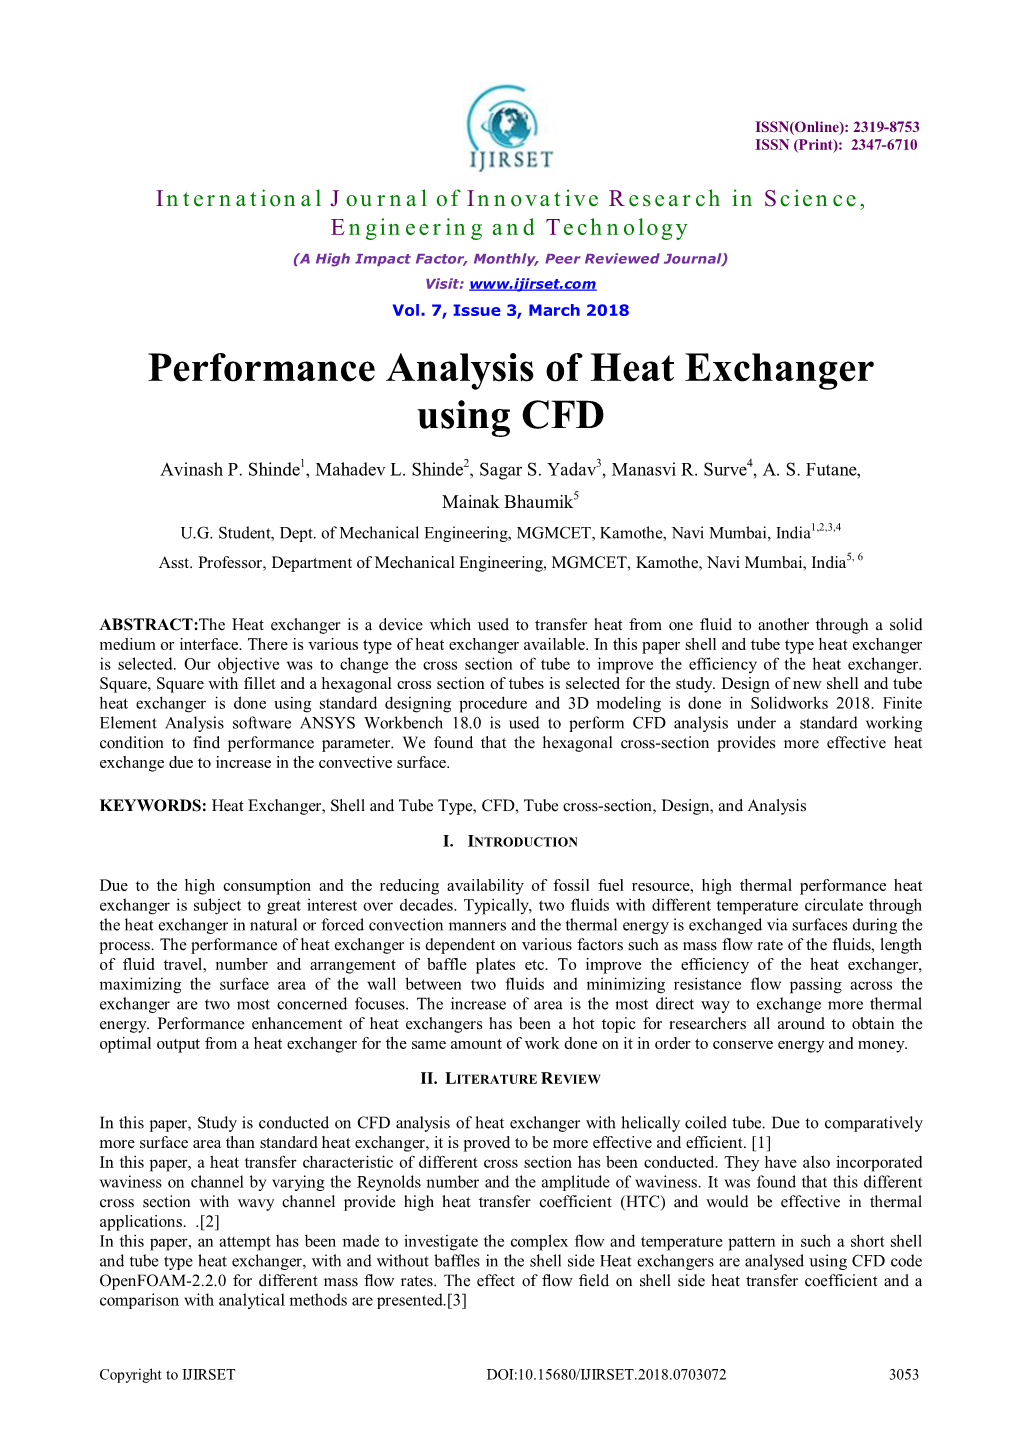 Performance Analysis of Heat Exchanger Using CFD